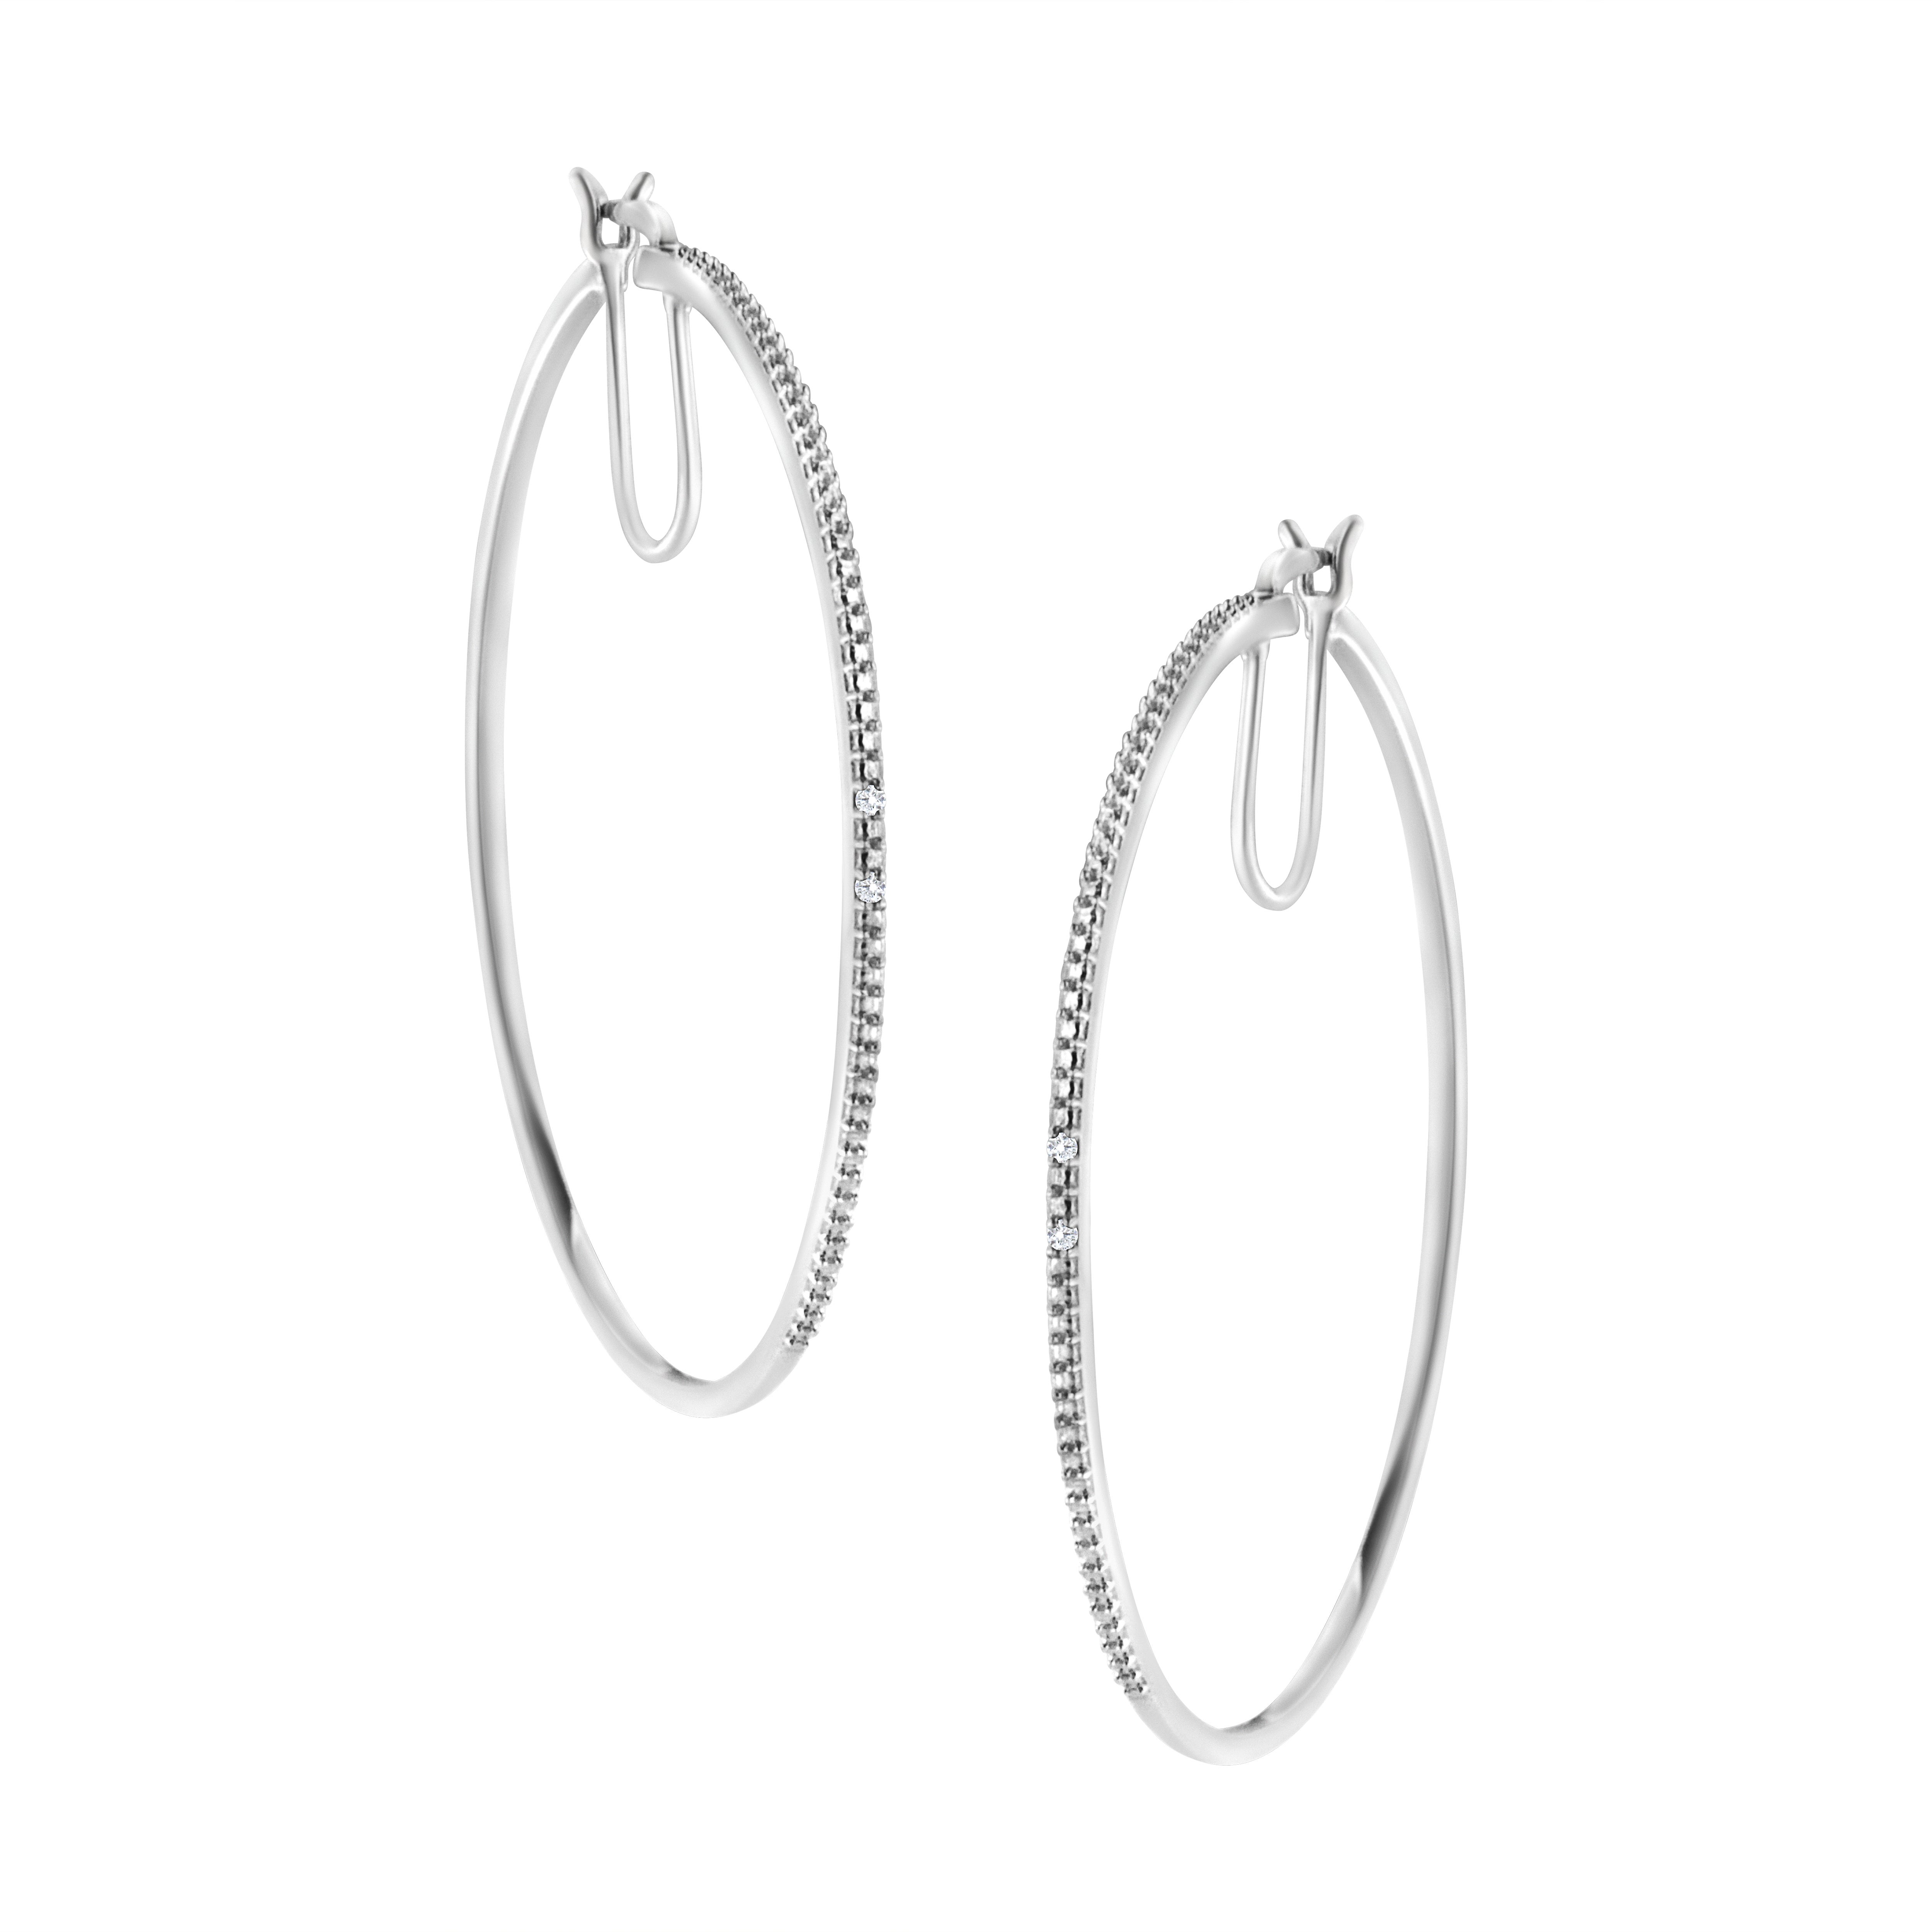 .925 Sterling Silver Diamond Accent Medium Sized Hoops Earrings  i j, I2 i3